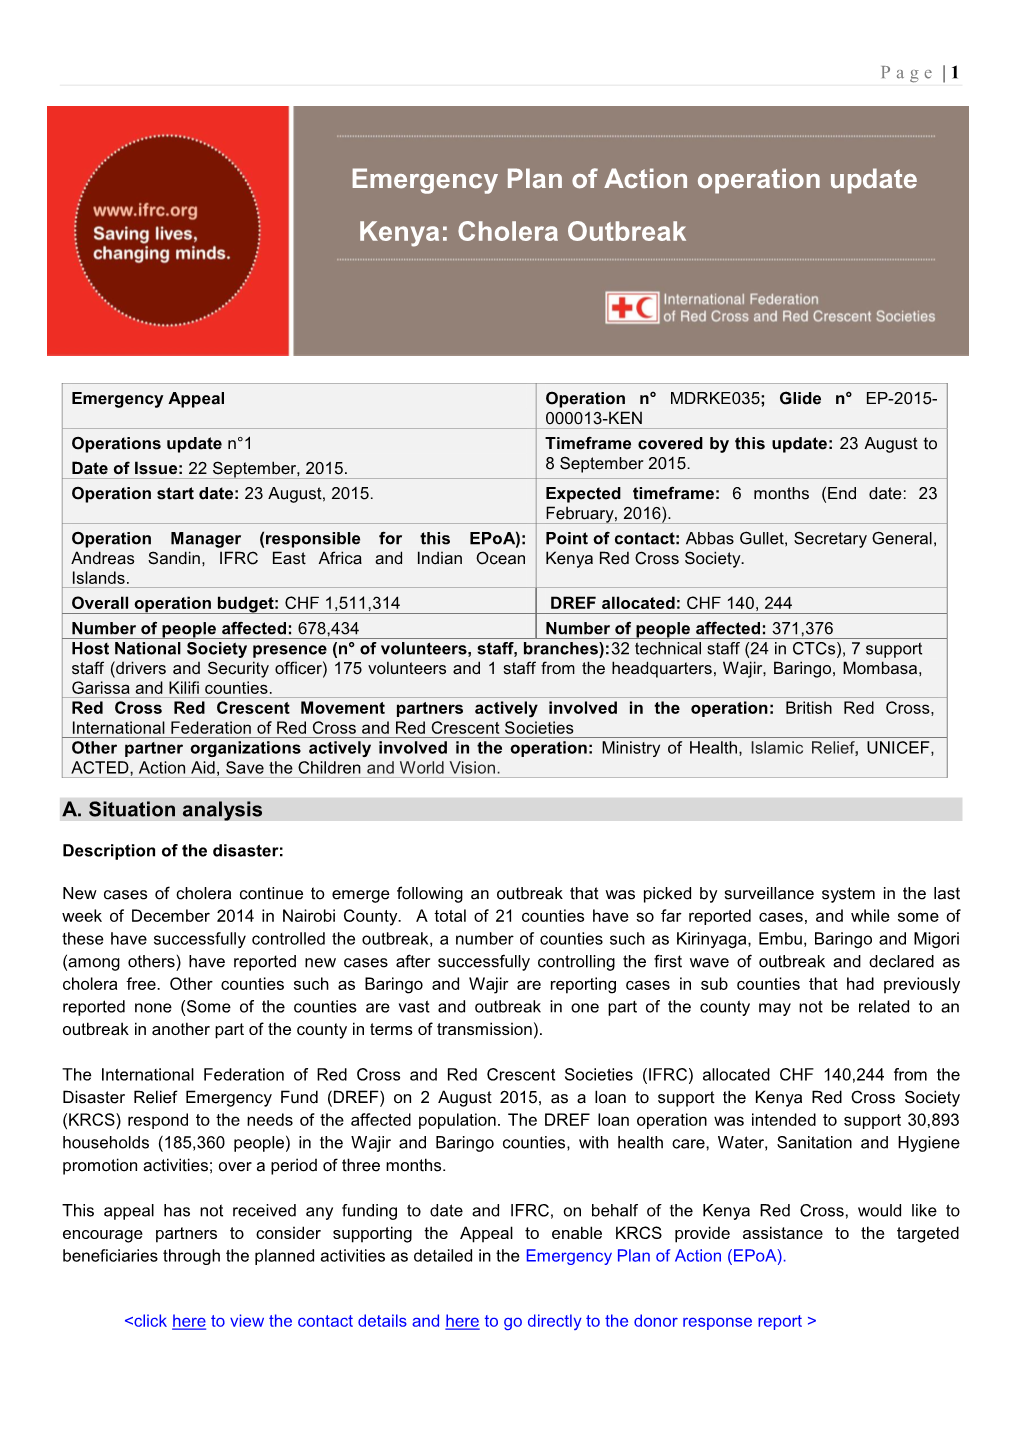 Emergency Plan of Action Operation Update Kenya: Cholera Outbreak